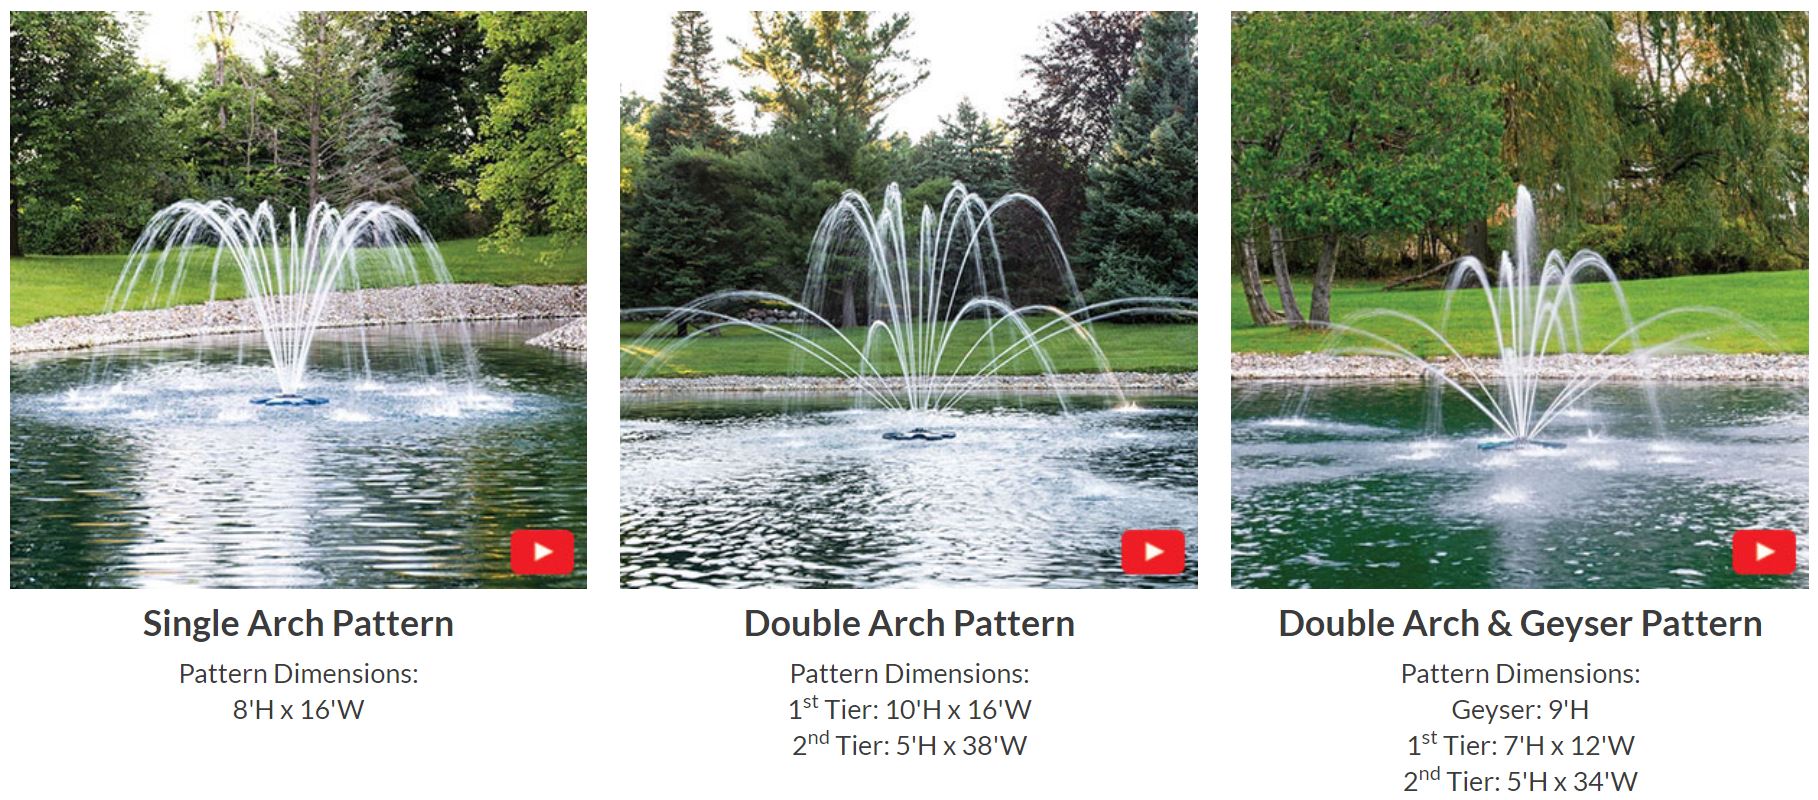 airmax-ecoseries-pond-fountains-optional-spray-patterns.aqua-link.jpg